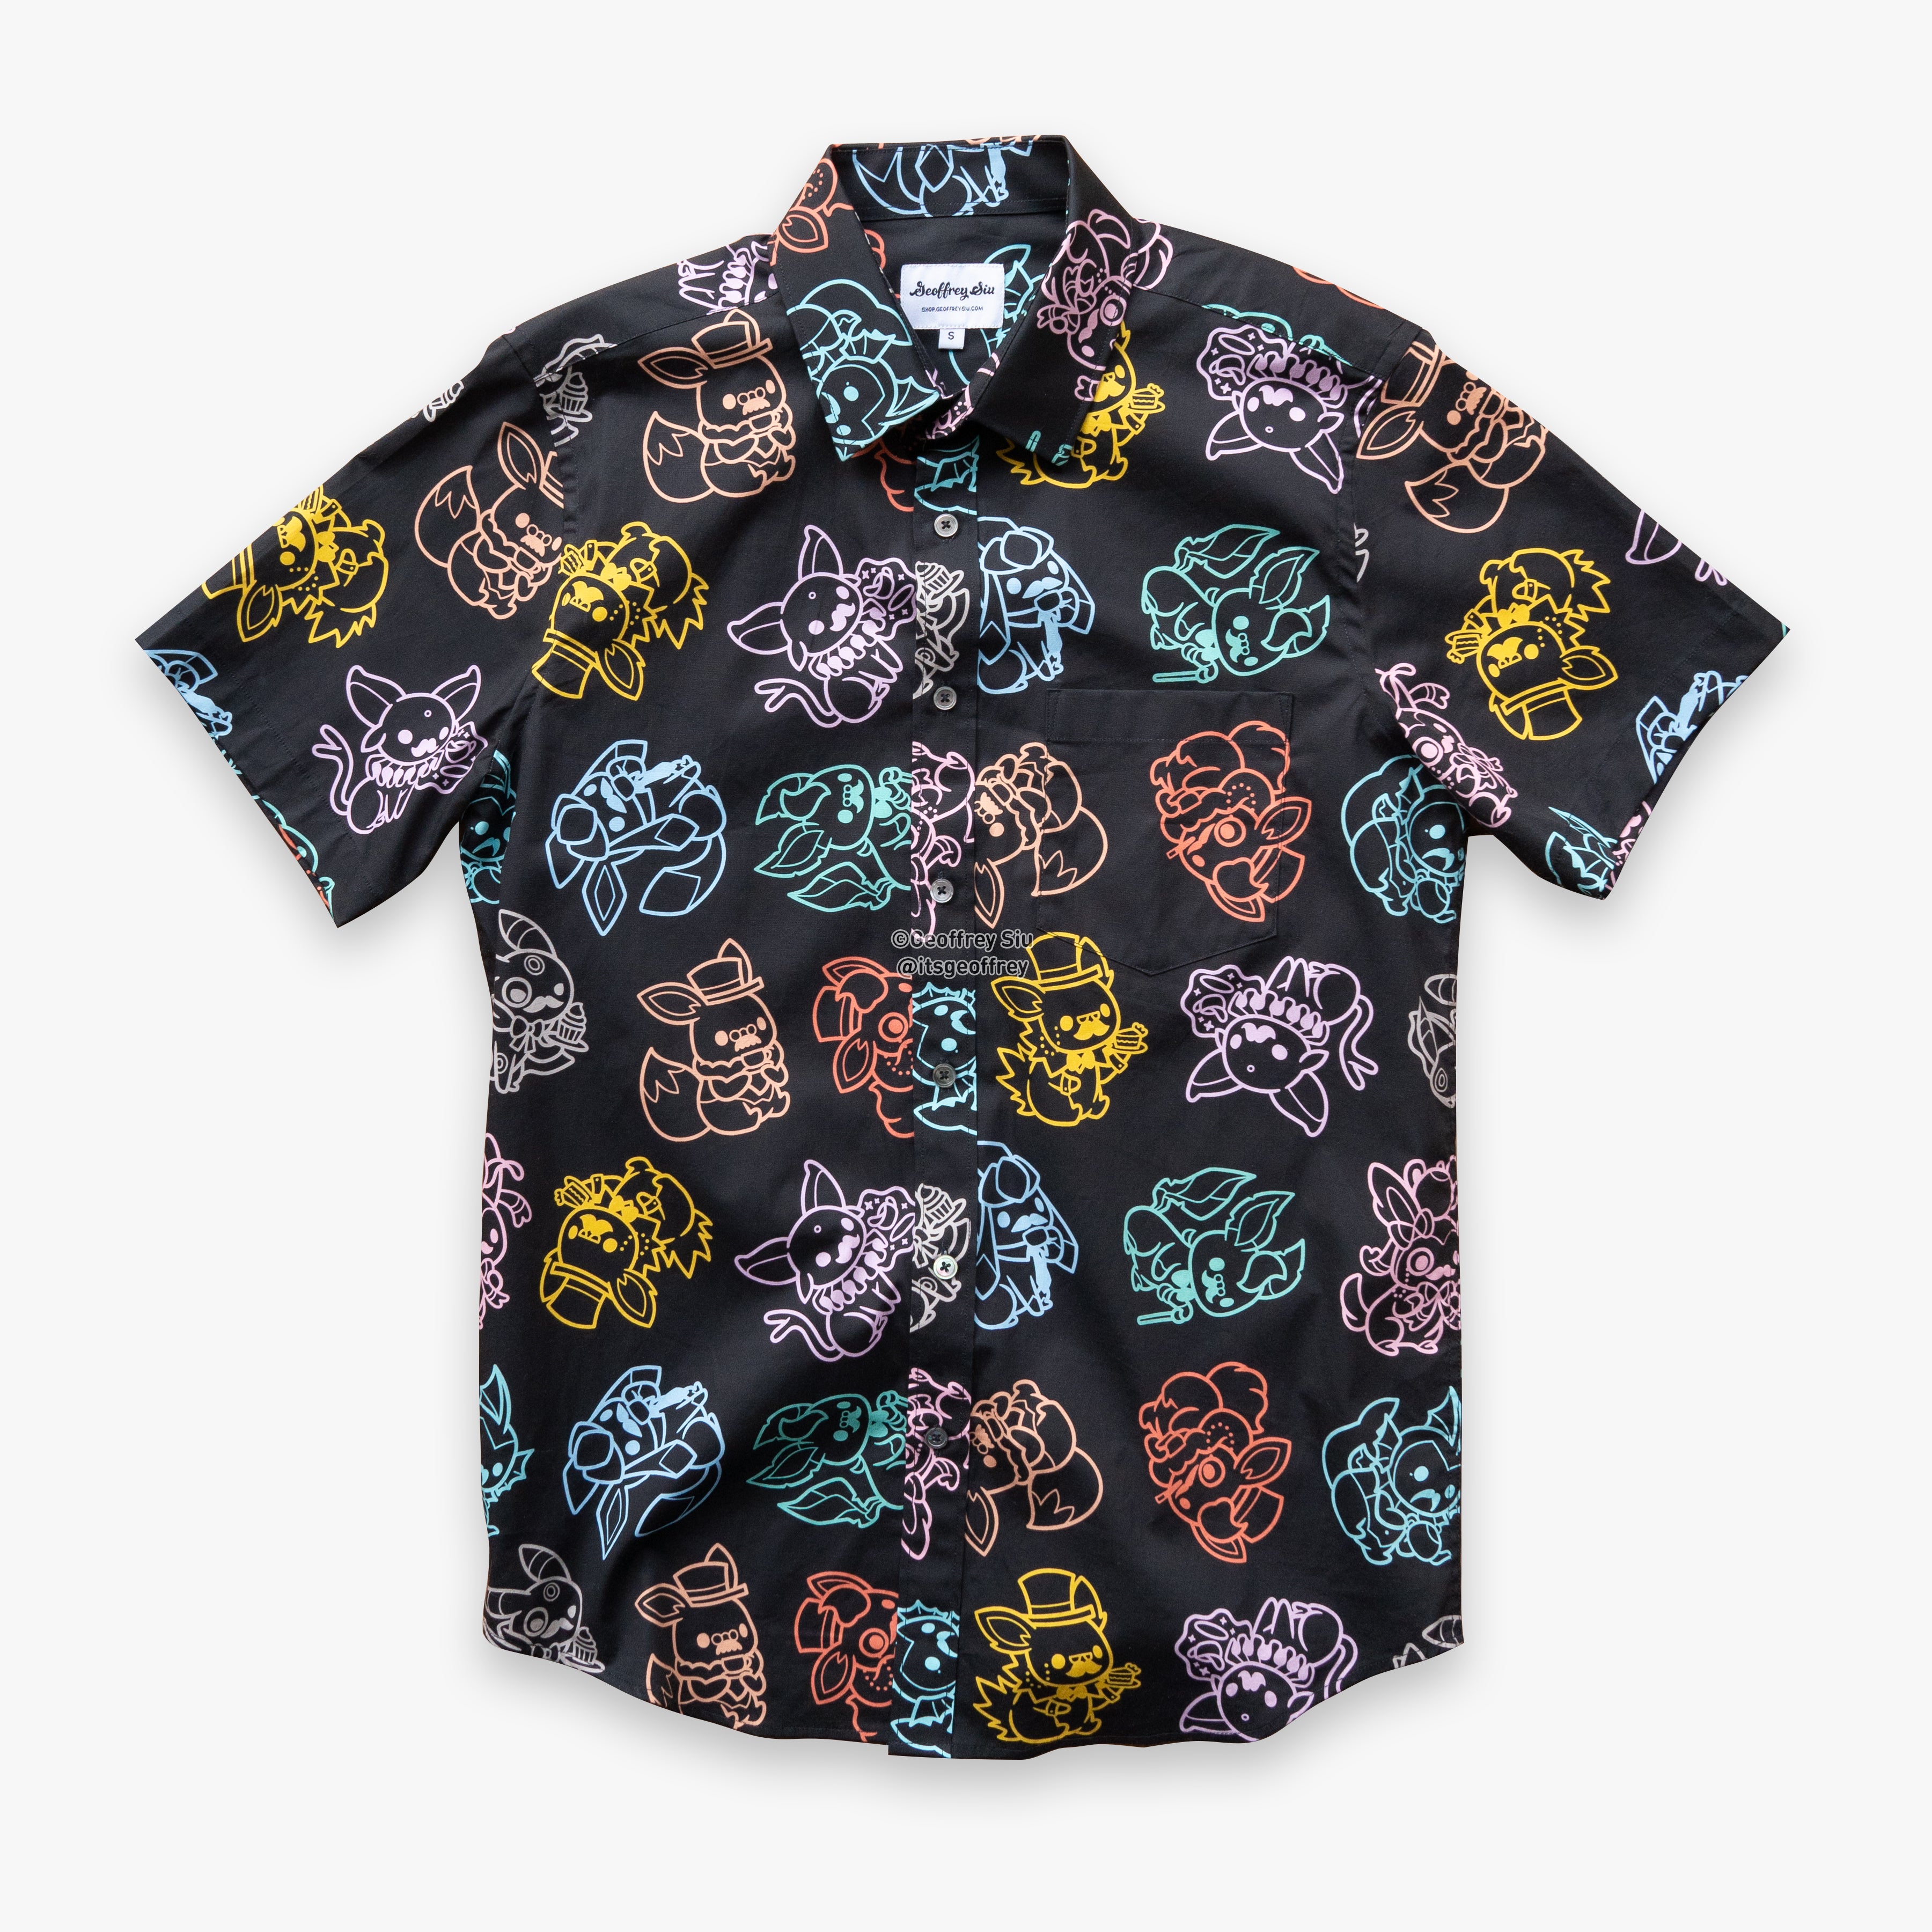 NEW Black Teaveelution Button-Up Shirt